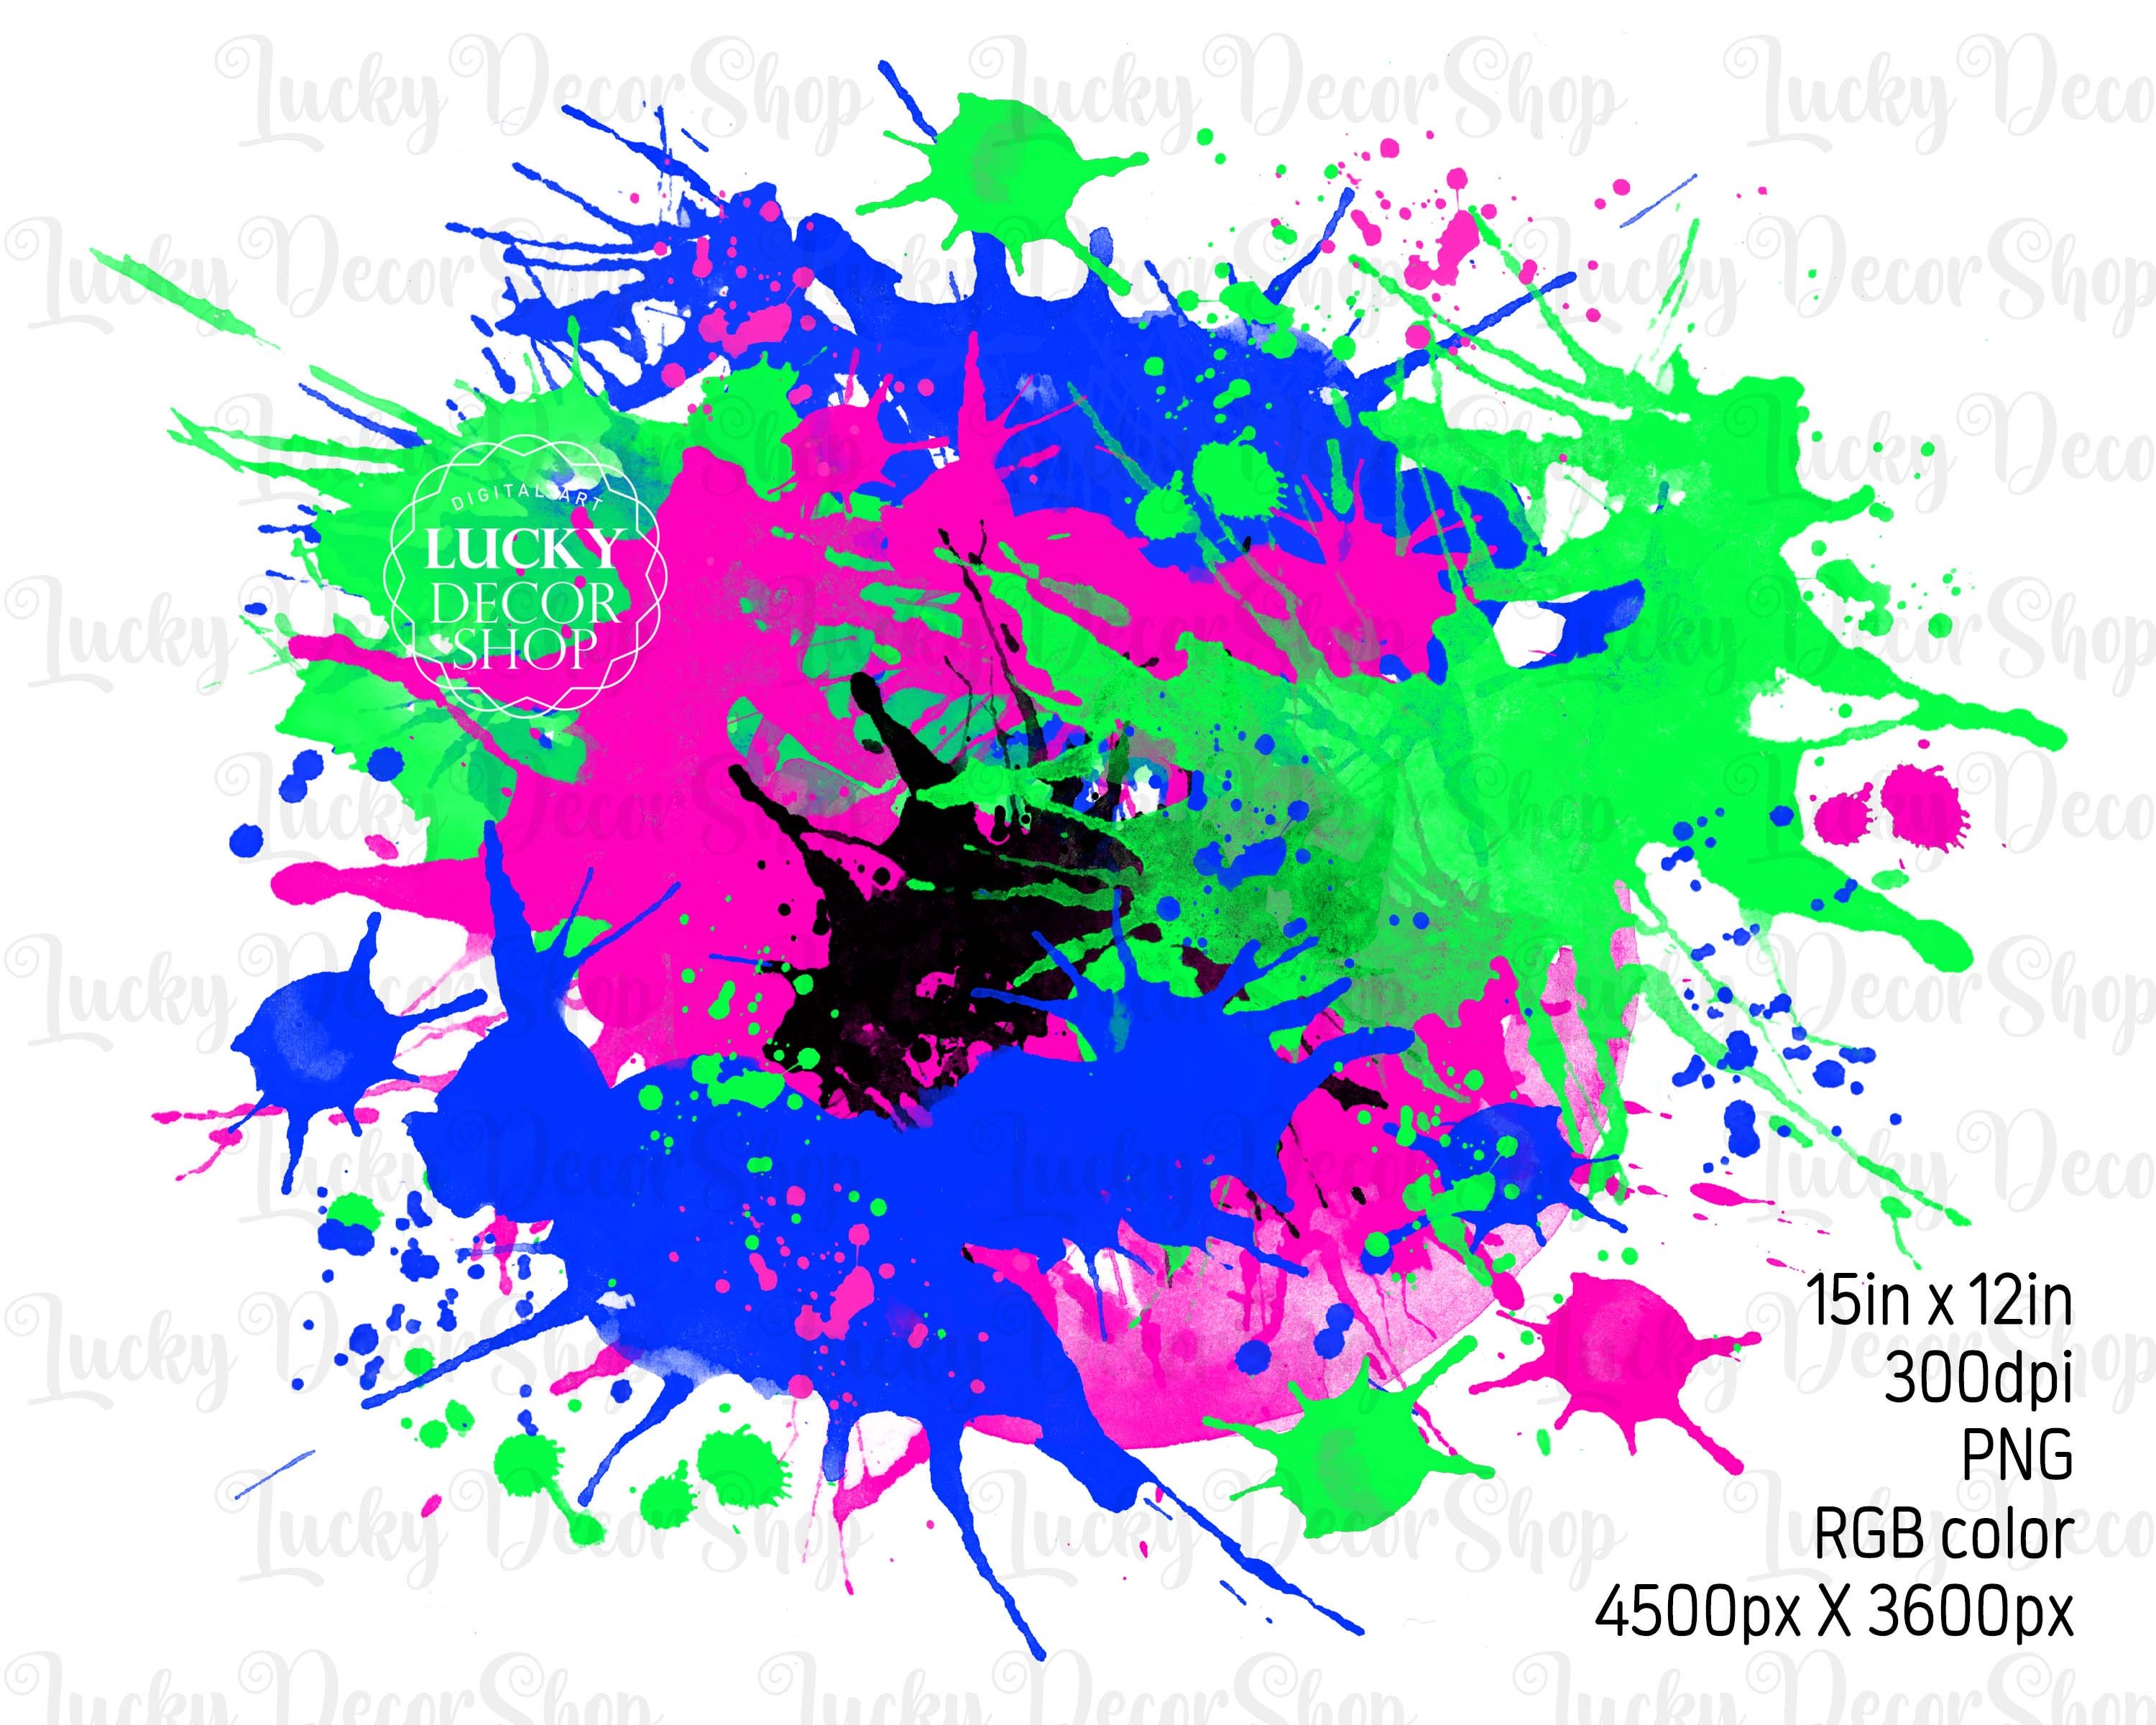 Neon Paint Splatters on Black Background Clipart, Neon Splatter Drops Black  Background, Neon Ink Splash Texture, Canva Background 